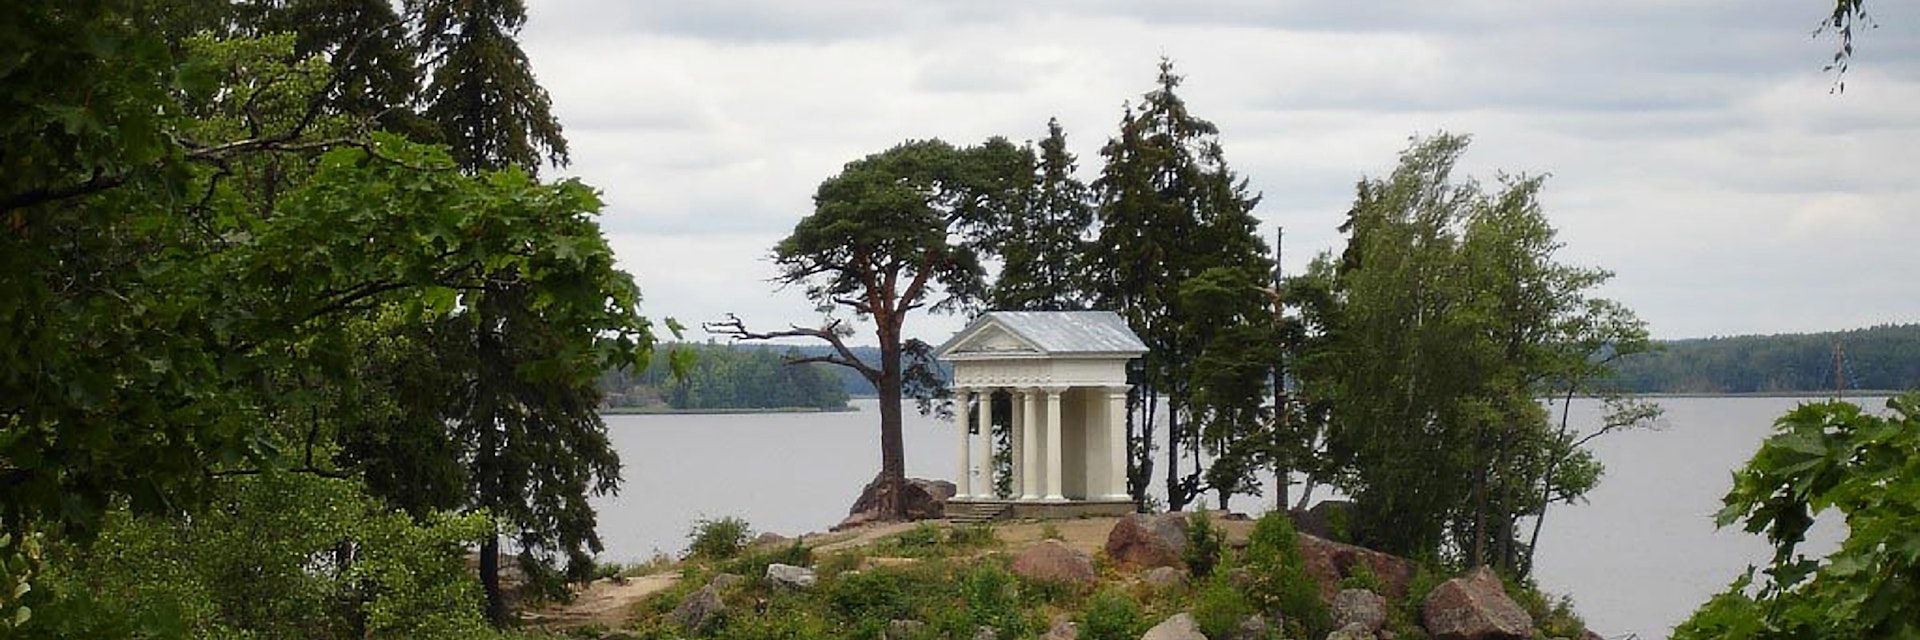 A pavilion in Vyborg's Park Monrepo.